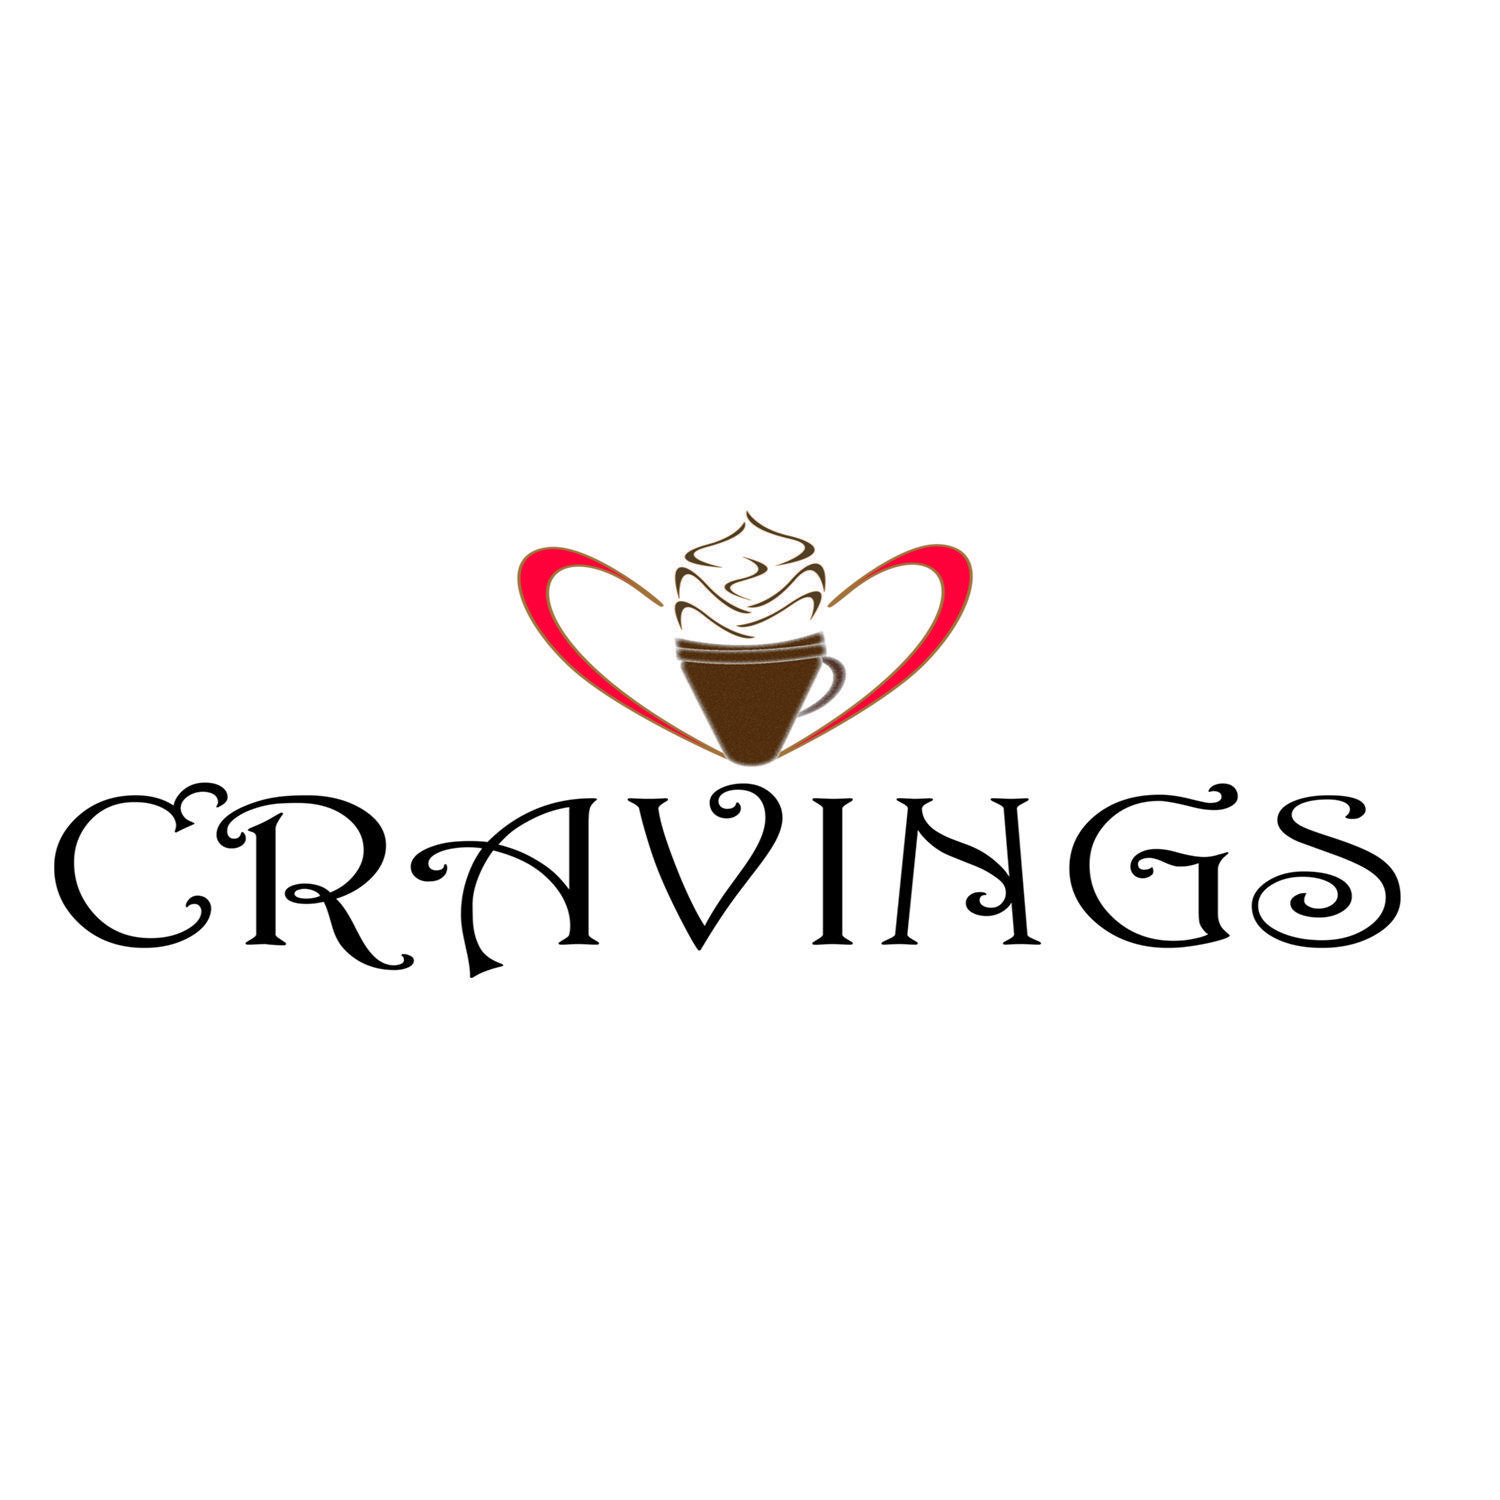 Ice Cream Business Logo - Elegant, Upmarket, Business Logo Design for Cravings Coffee & Ice ...